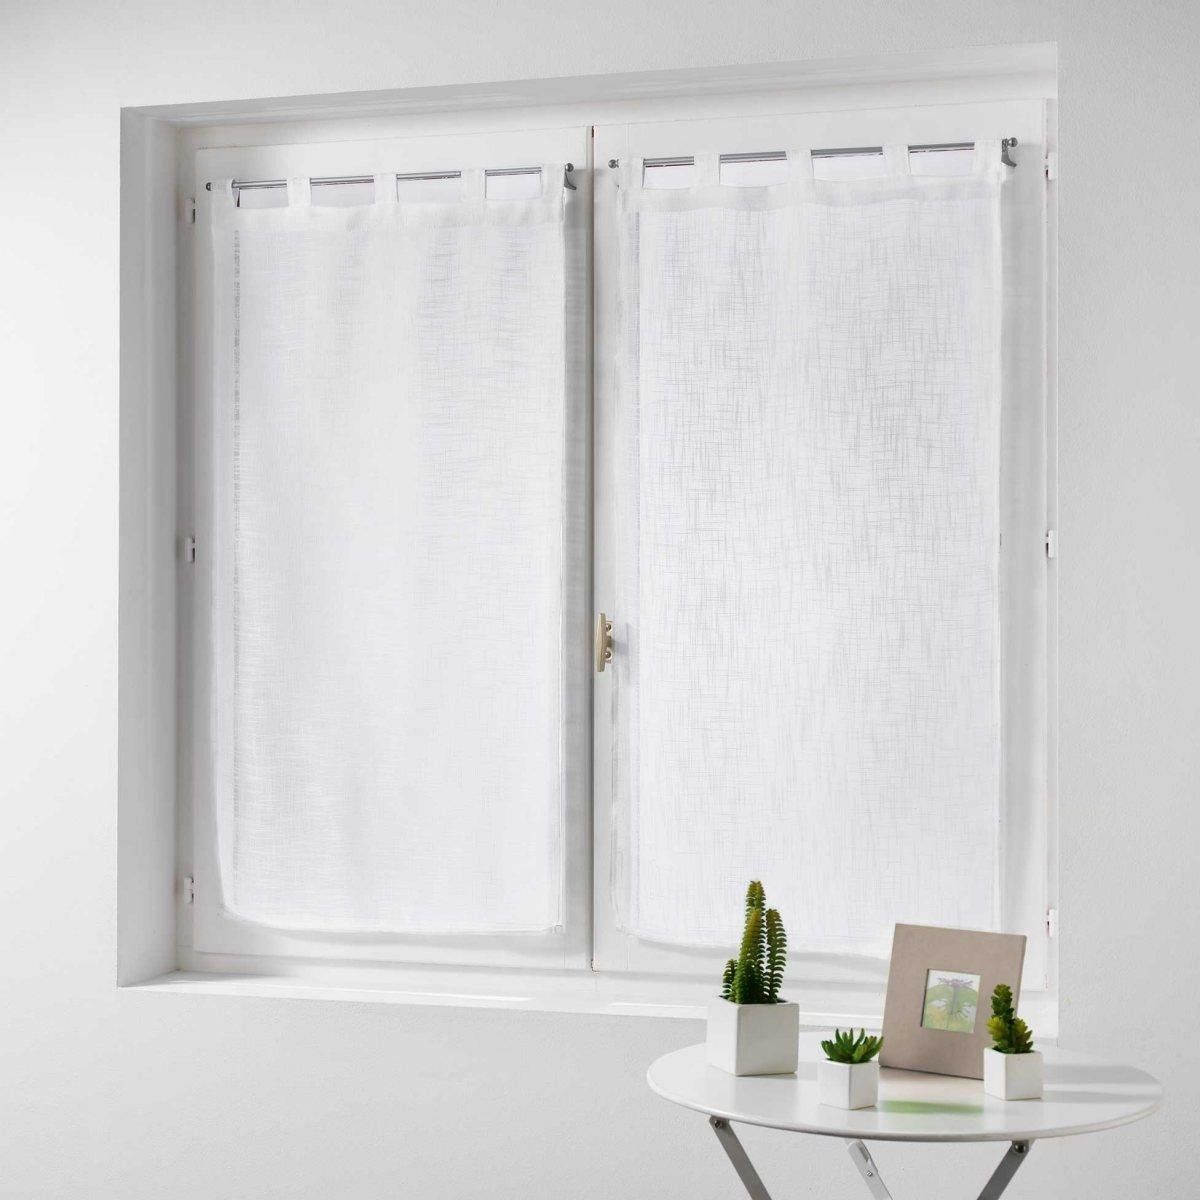 Douceur d\'intérieur Kuchyňská krátká záclona HALTONA, 60 x 160 cm, bílá, 2 ks. - EDAXO.CZ s.r.o.